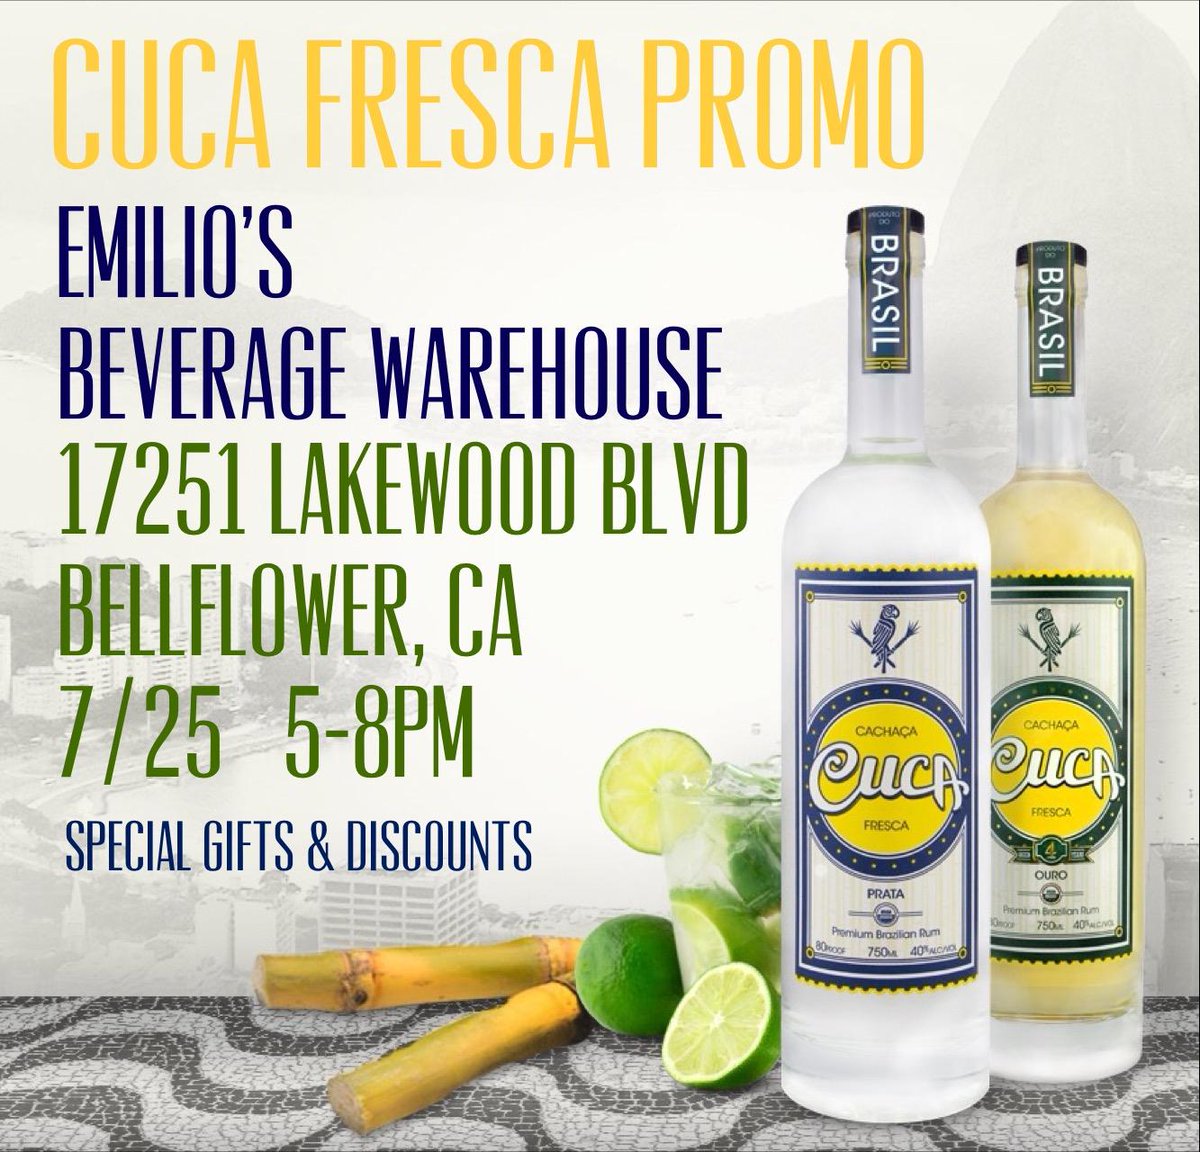 .@cuca_fresca tasting tomorrow @ Emilios in LB ! #drinkdifferent http://t.co/fwZh5hLLBp